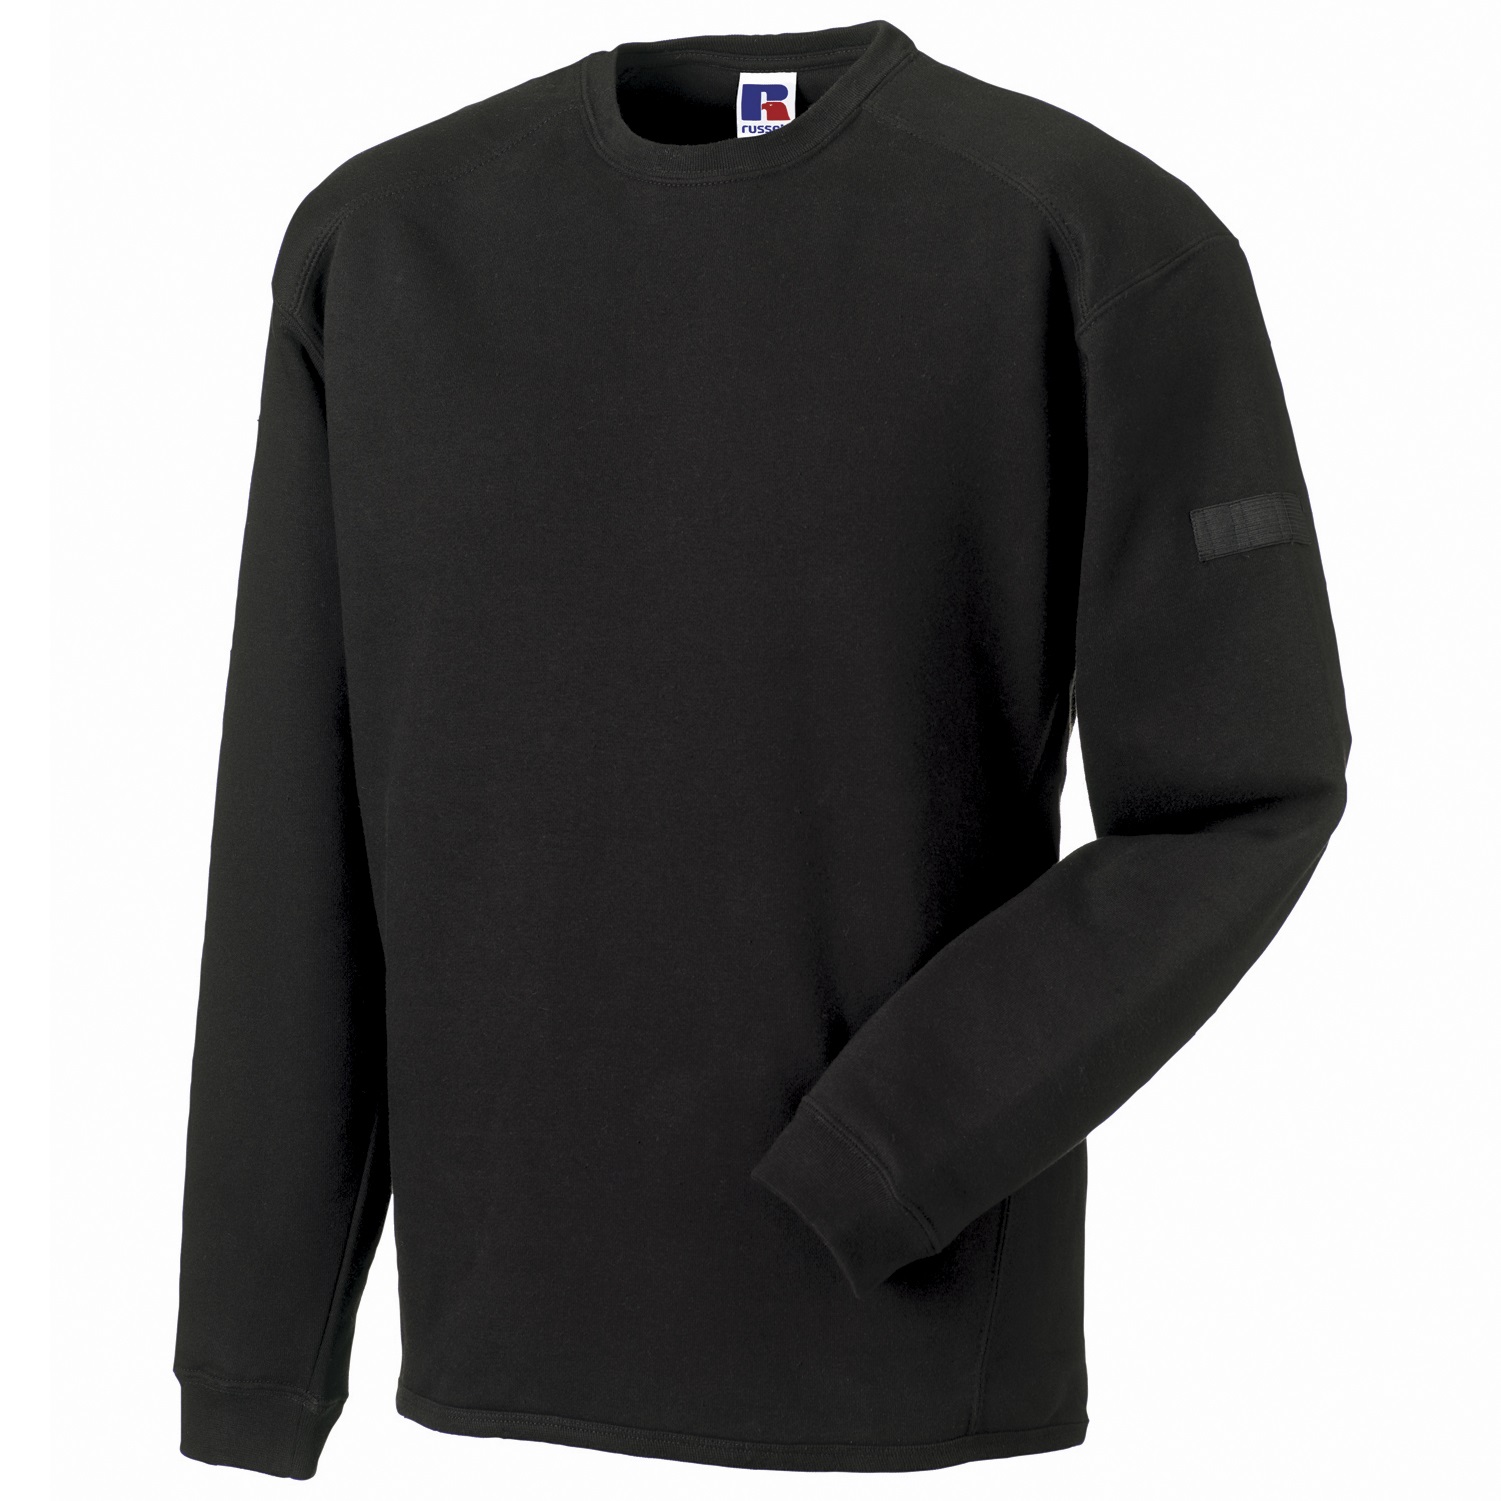 J013M Heavy duty crew neck sweatshirt – GDB Manufacturing